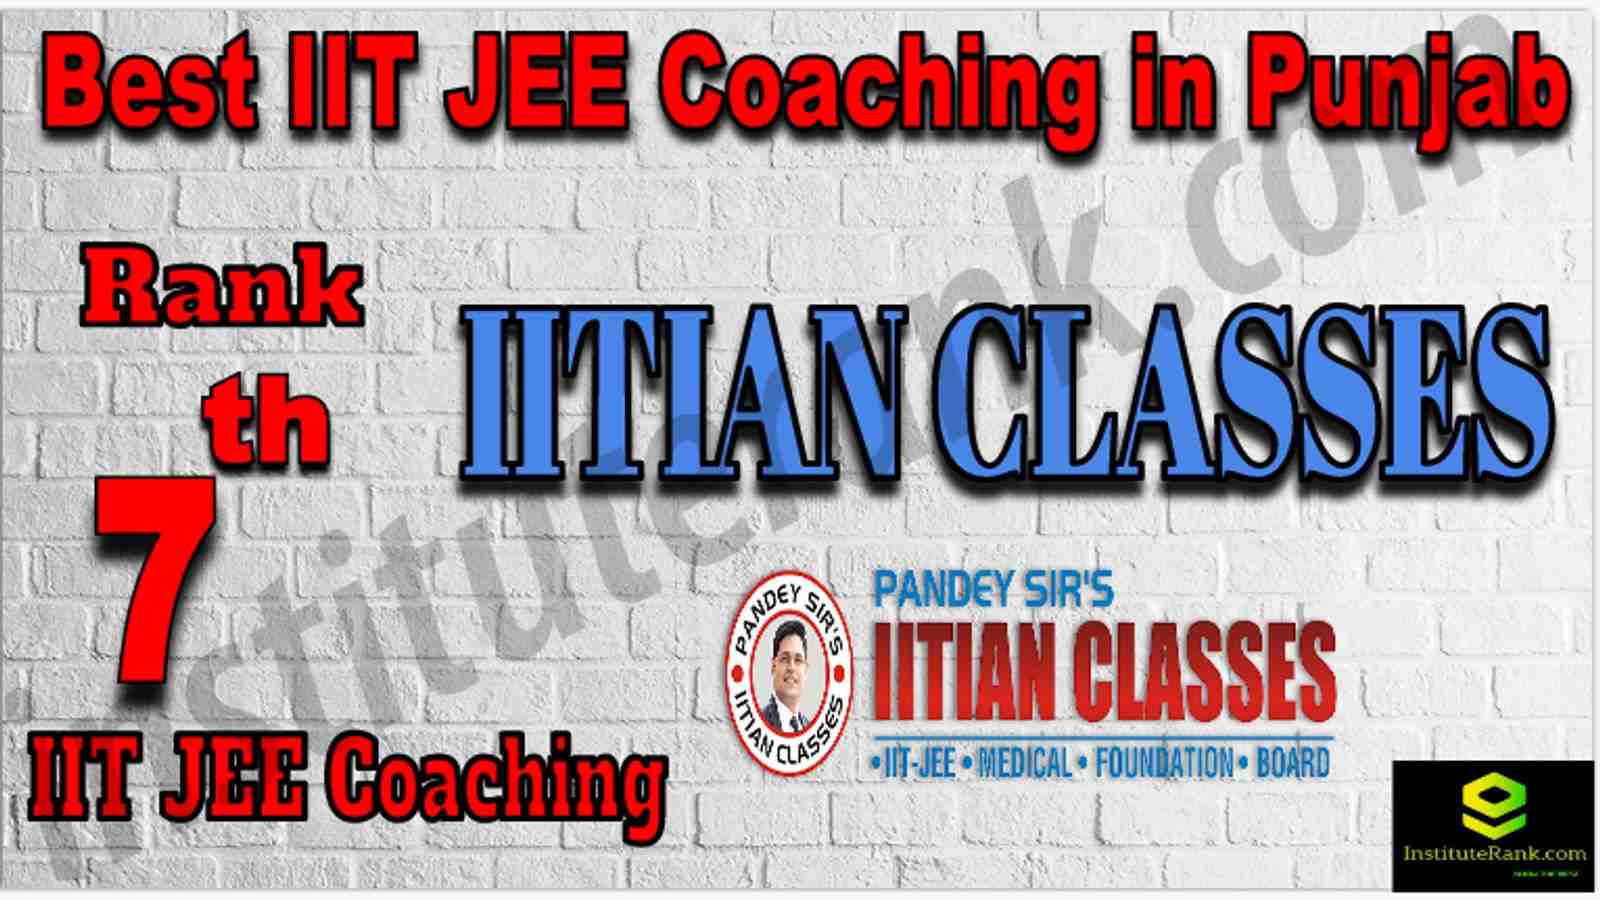 Rank 7th Best IIT JEE Coaching in Punjab